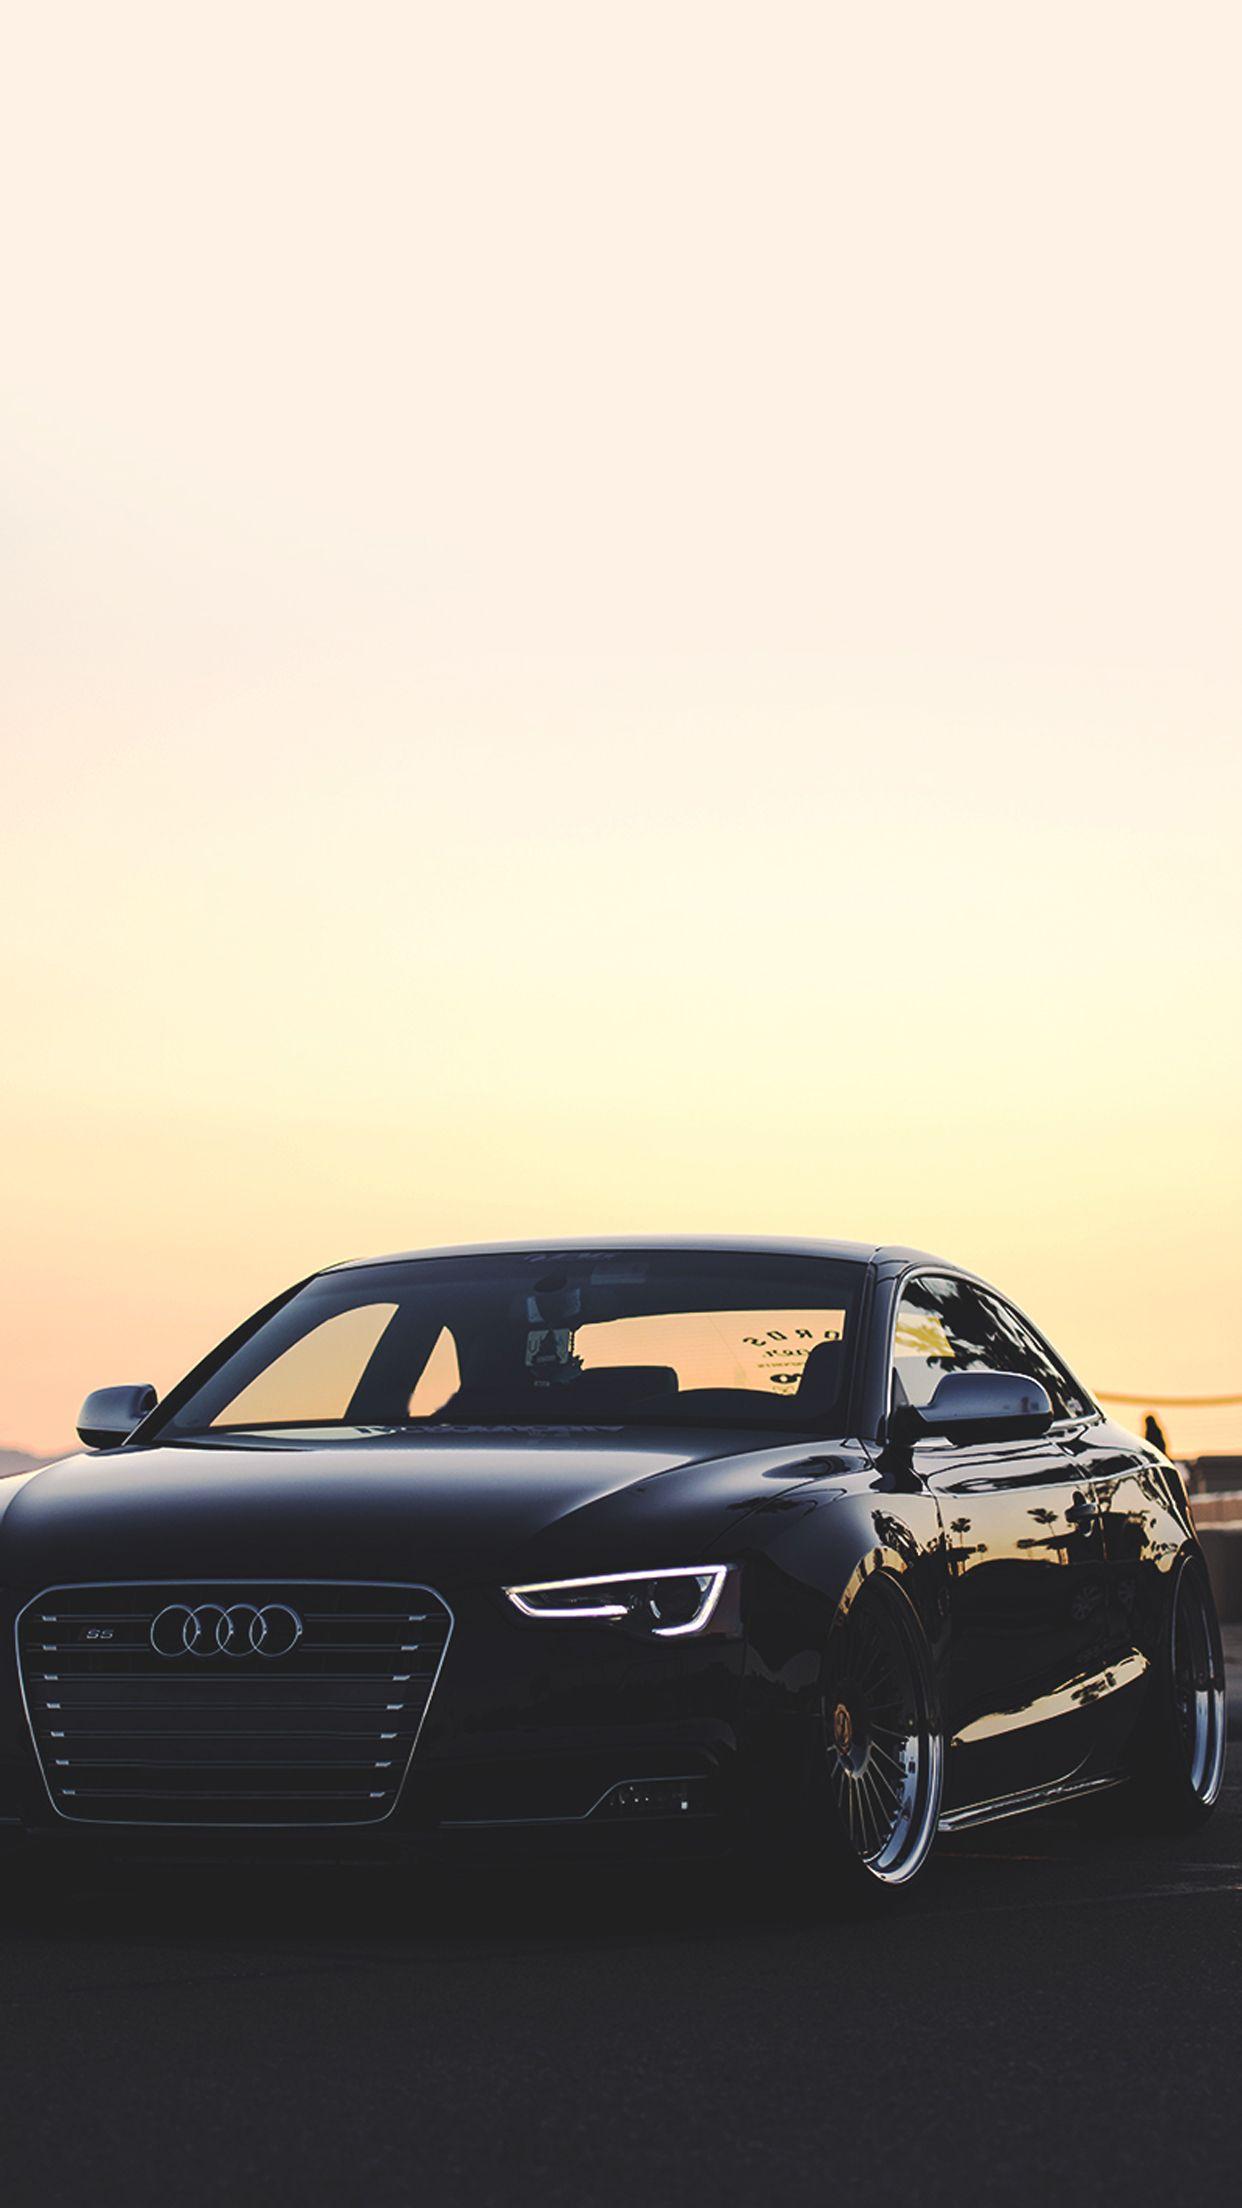 Audi Car Wallpaper Hd Black